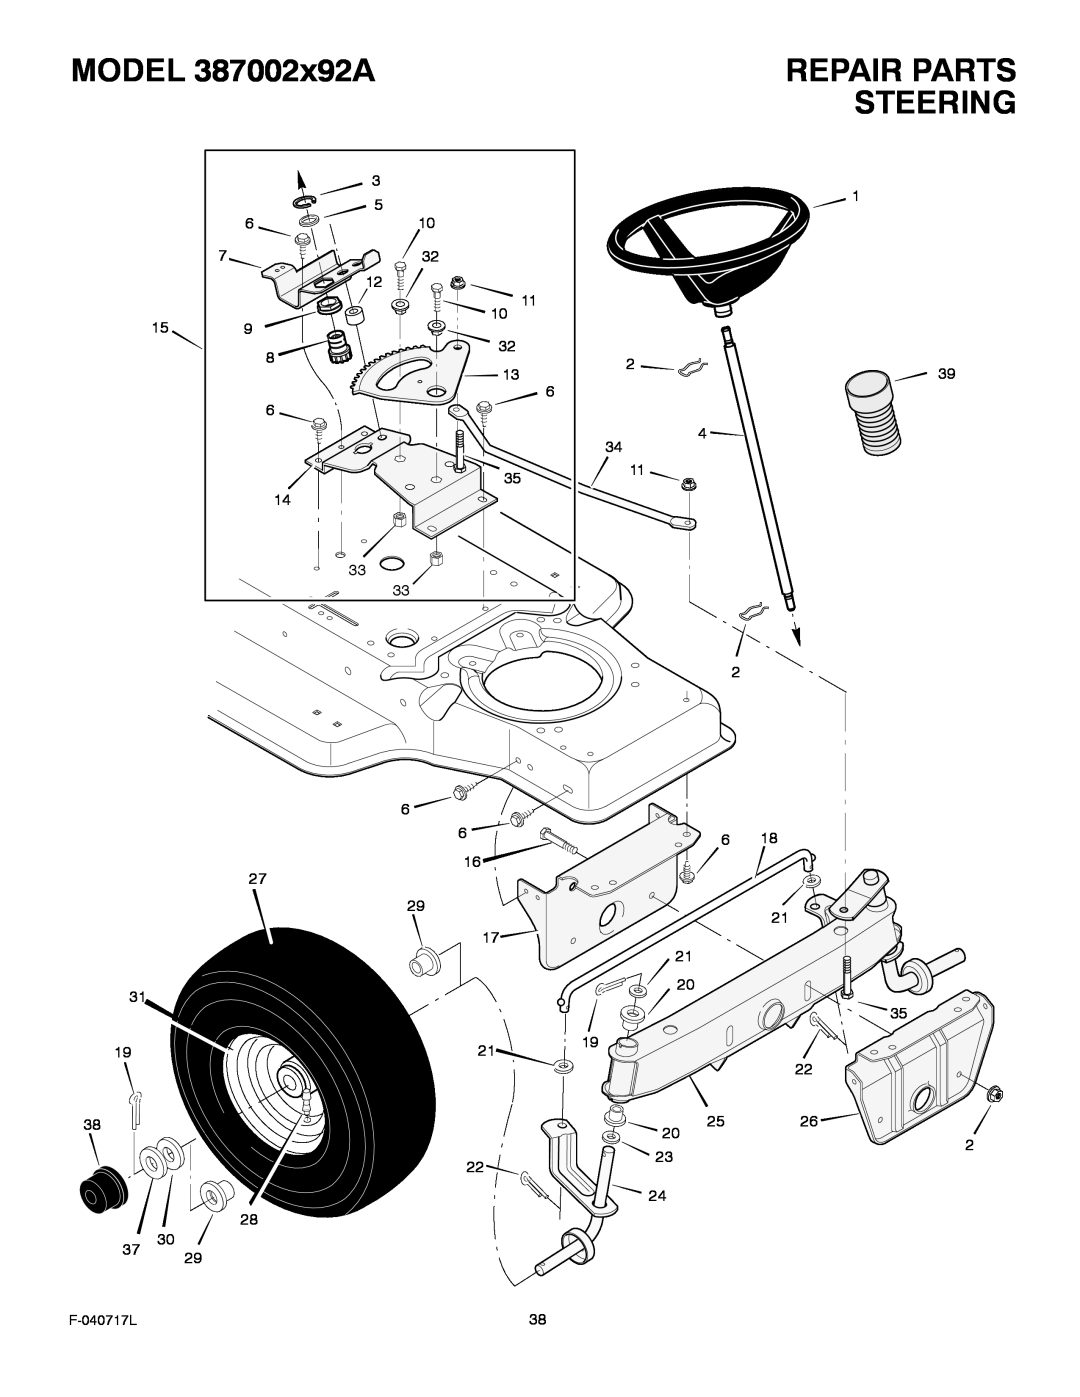 Murray manual Steering, MODEL 387002x92A, Repair Parts, F-040717L 